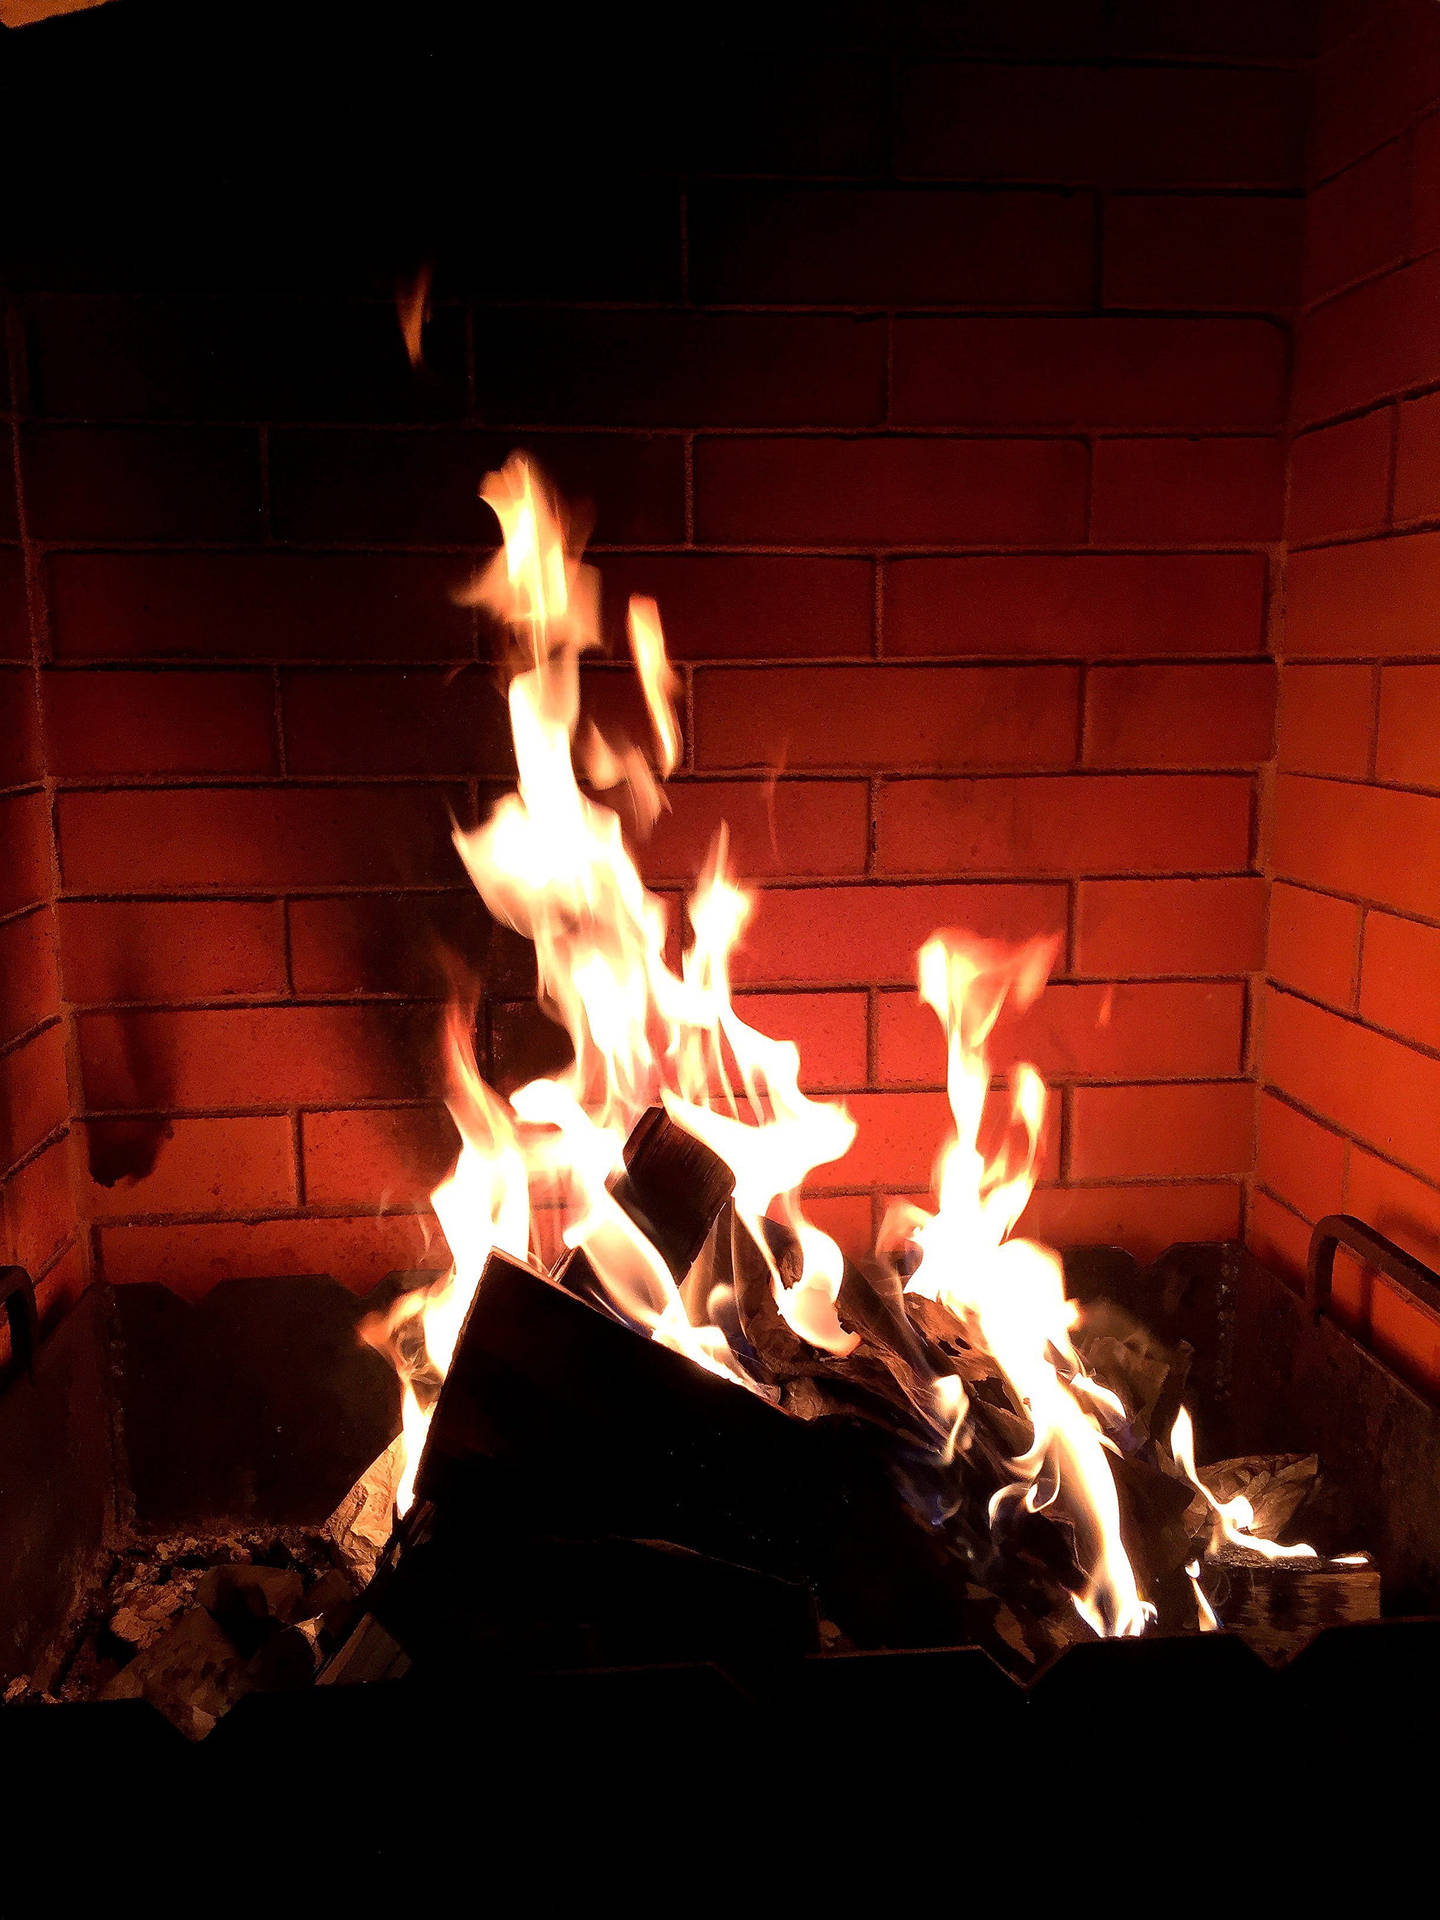 Hot Temperature Fire Place Wallpaper